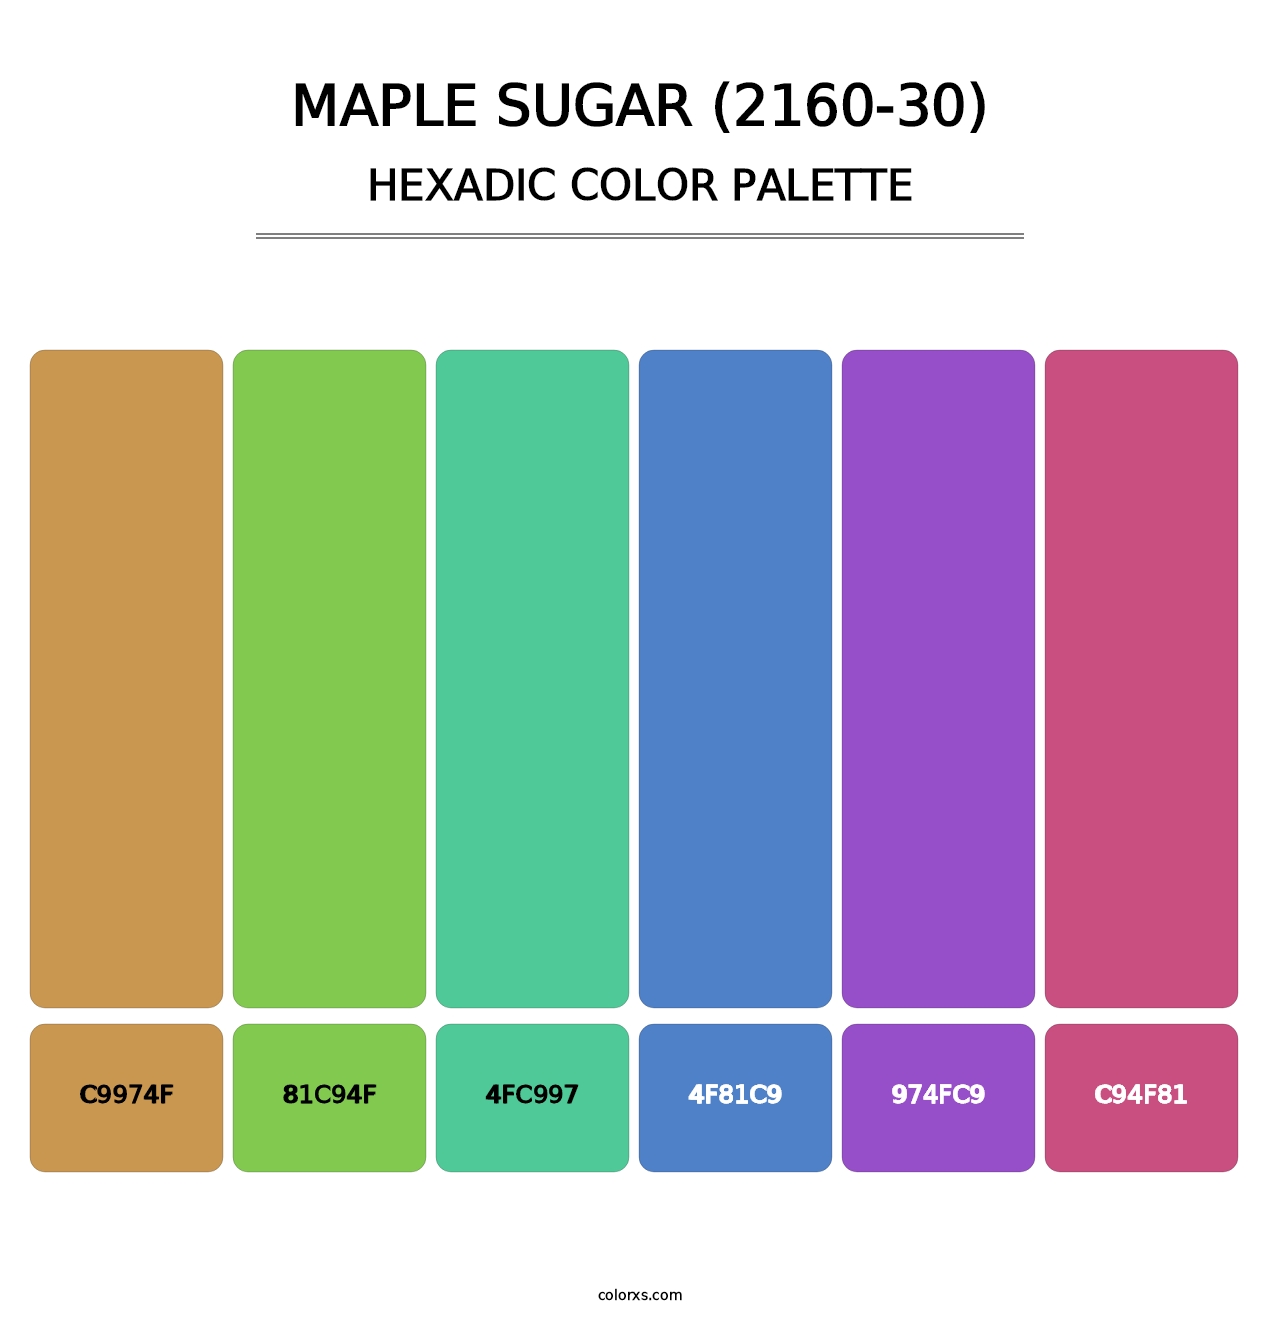 Maple Sugar (2160-30) - Hexadic Color Palette